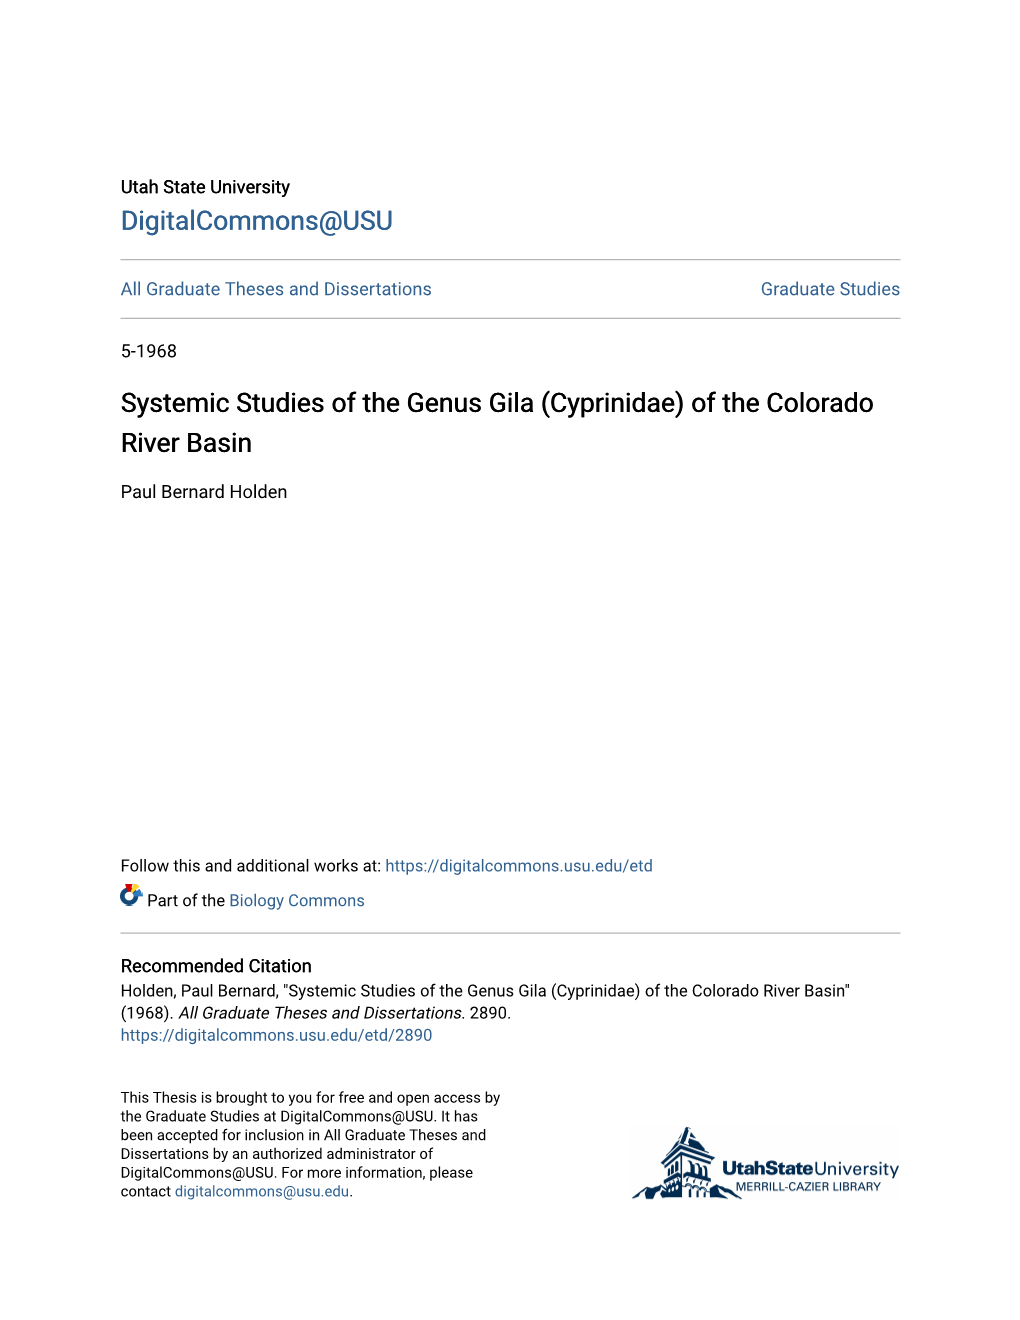 Systemic Studies of the Genus Gila (Cyprinidae) of the Colorado River Basin